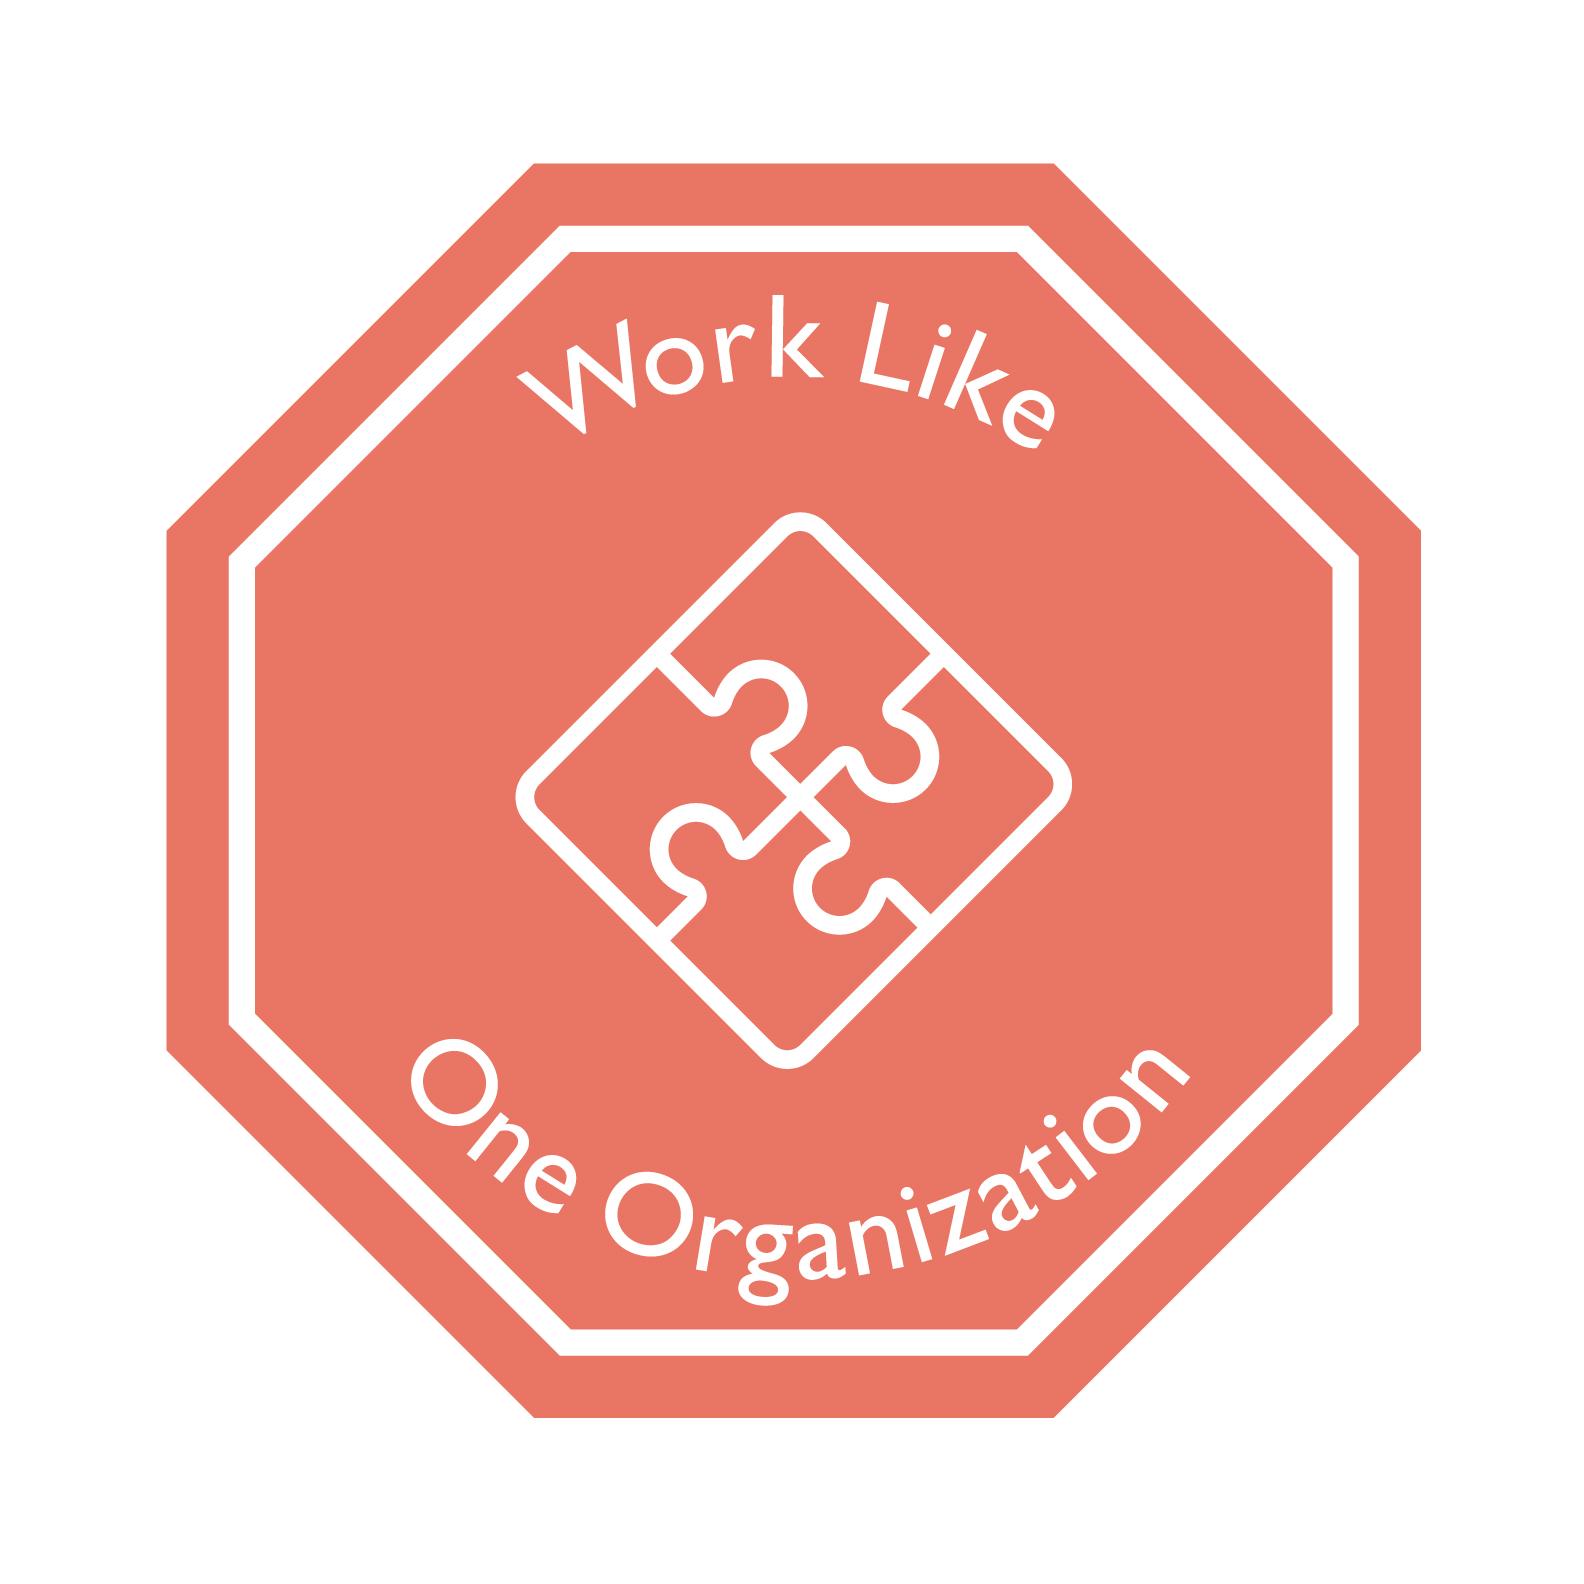 Work Like One Organization